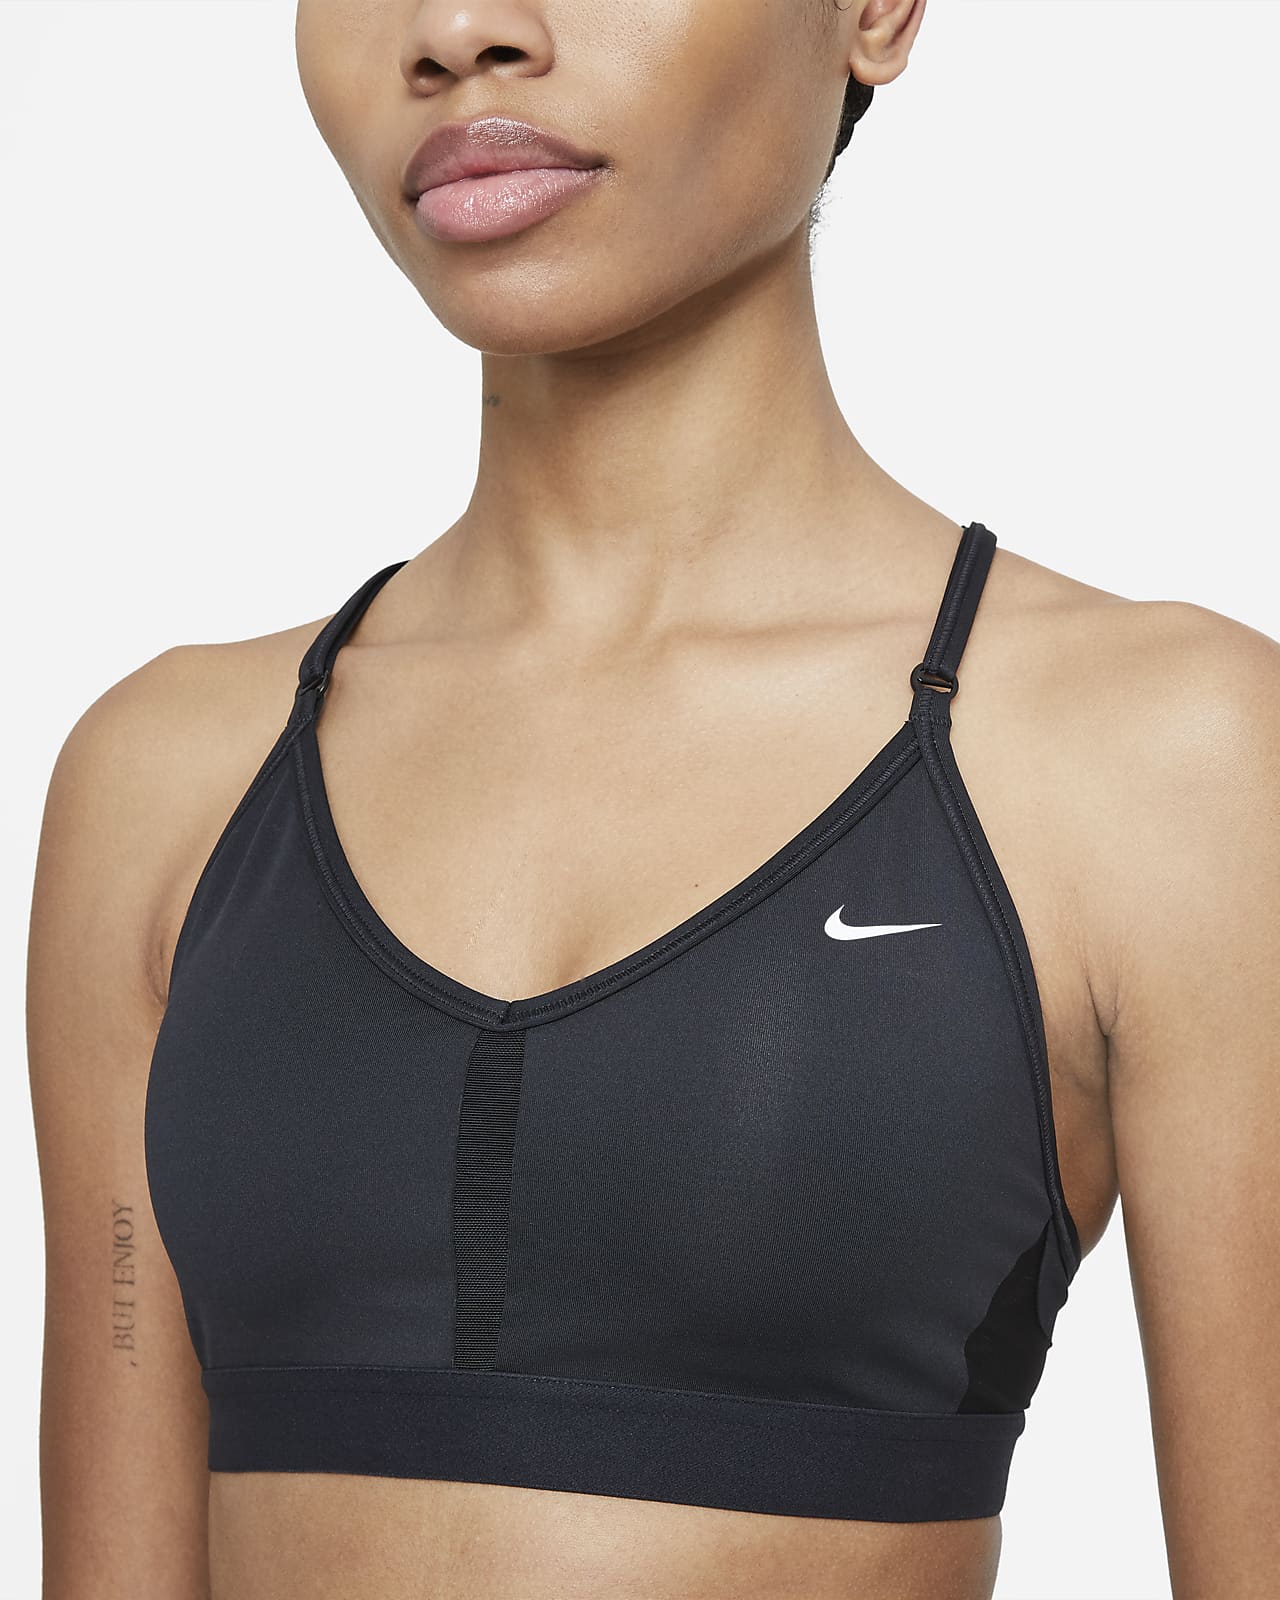 Nike Store Nike Indy Women's Light-Support Padded Longline Sports Bra..com  42.00